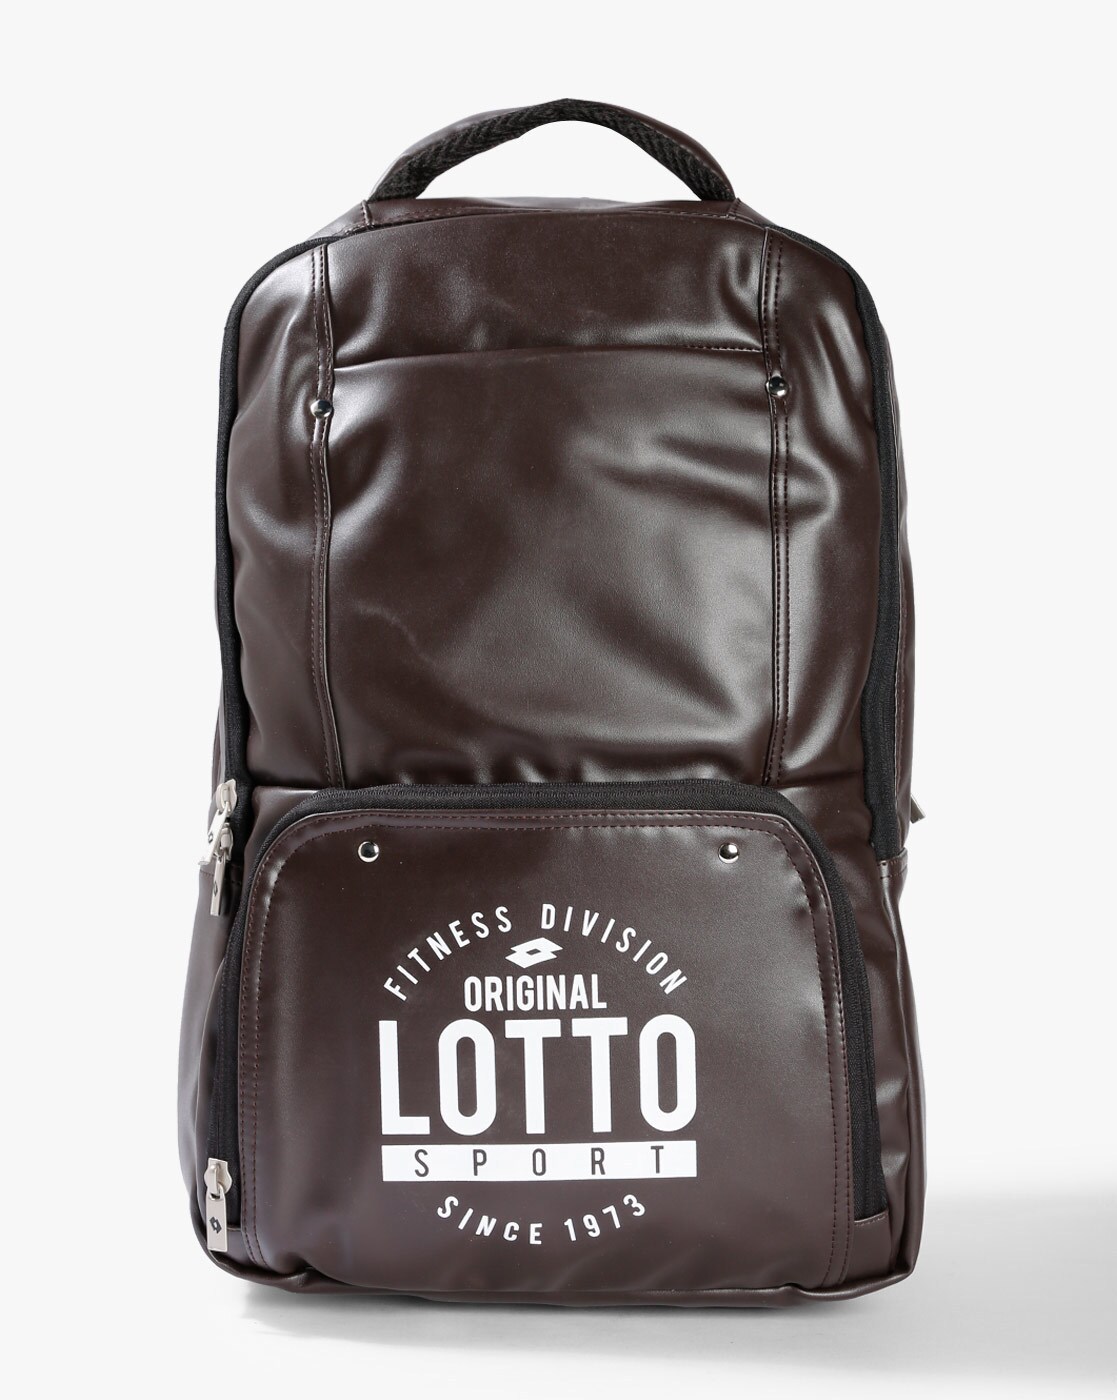 Bags Lotto Delta Plus • shop us.takemore.net